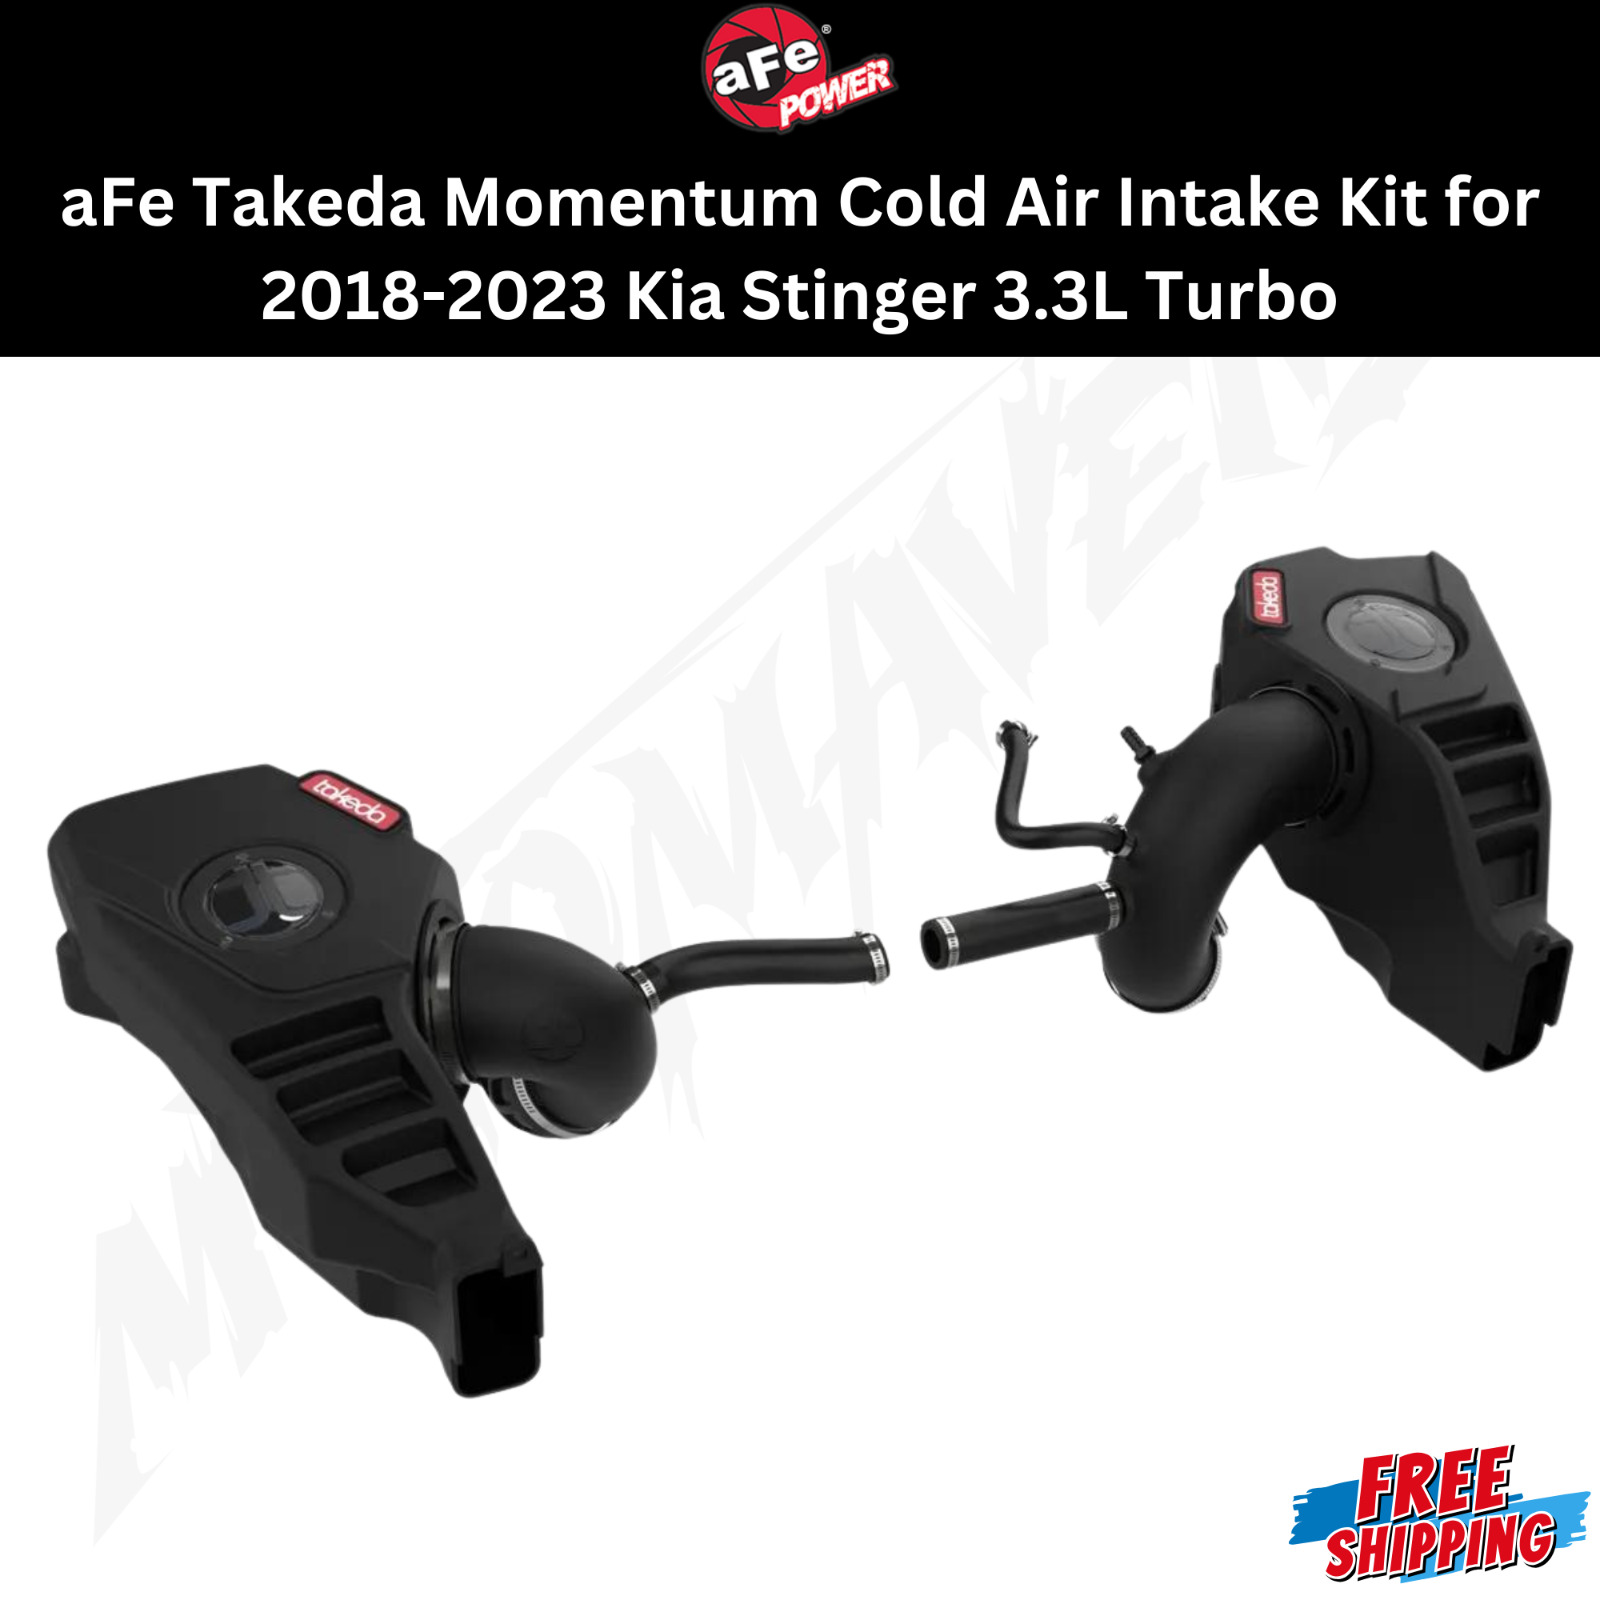 aFe Takeda Momentum Cold Air Intake Kit for 2018-2023 Kia Stinger 3.3L Turbo